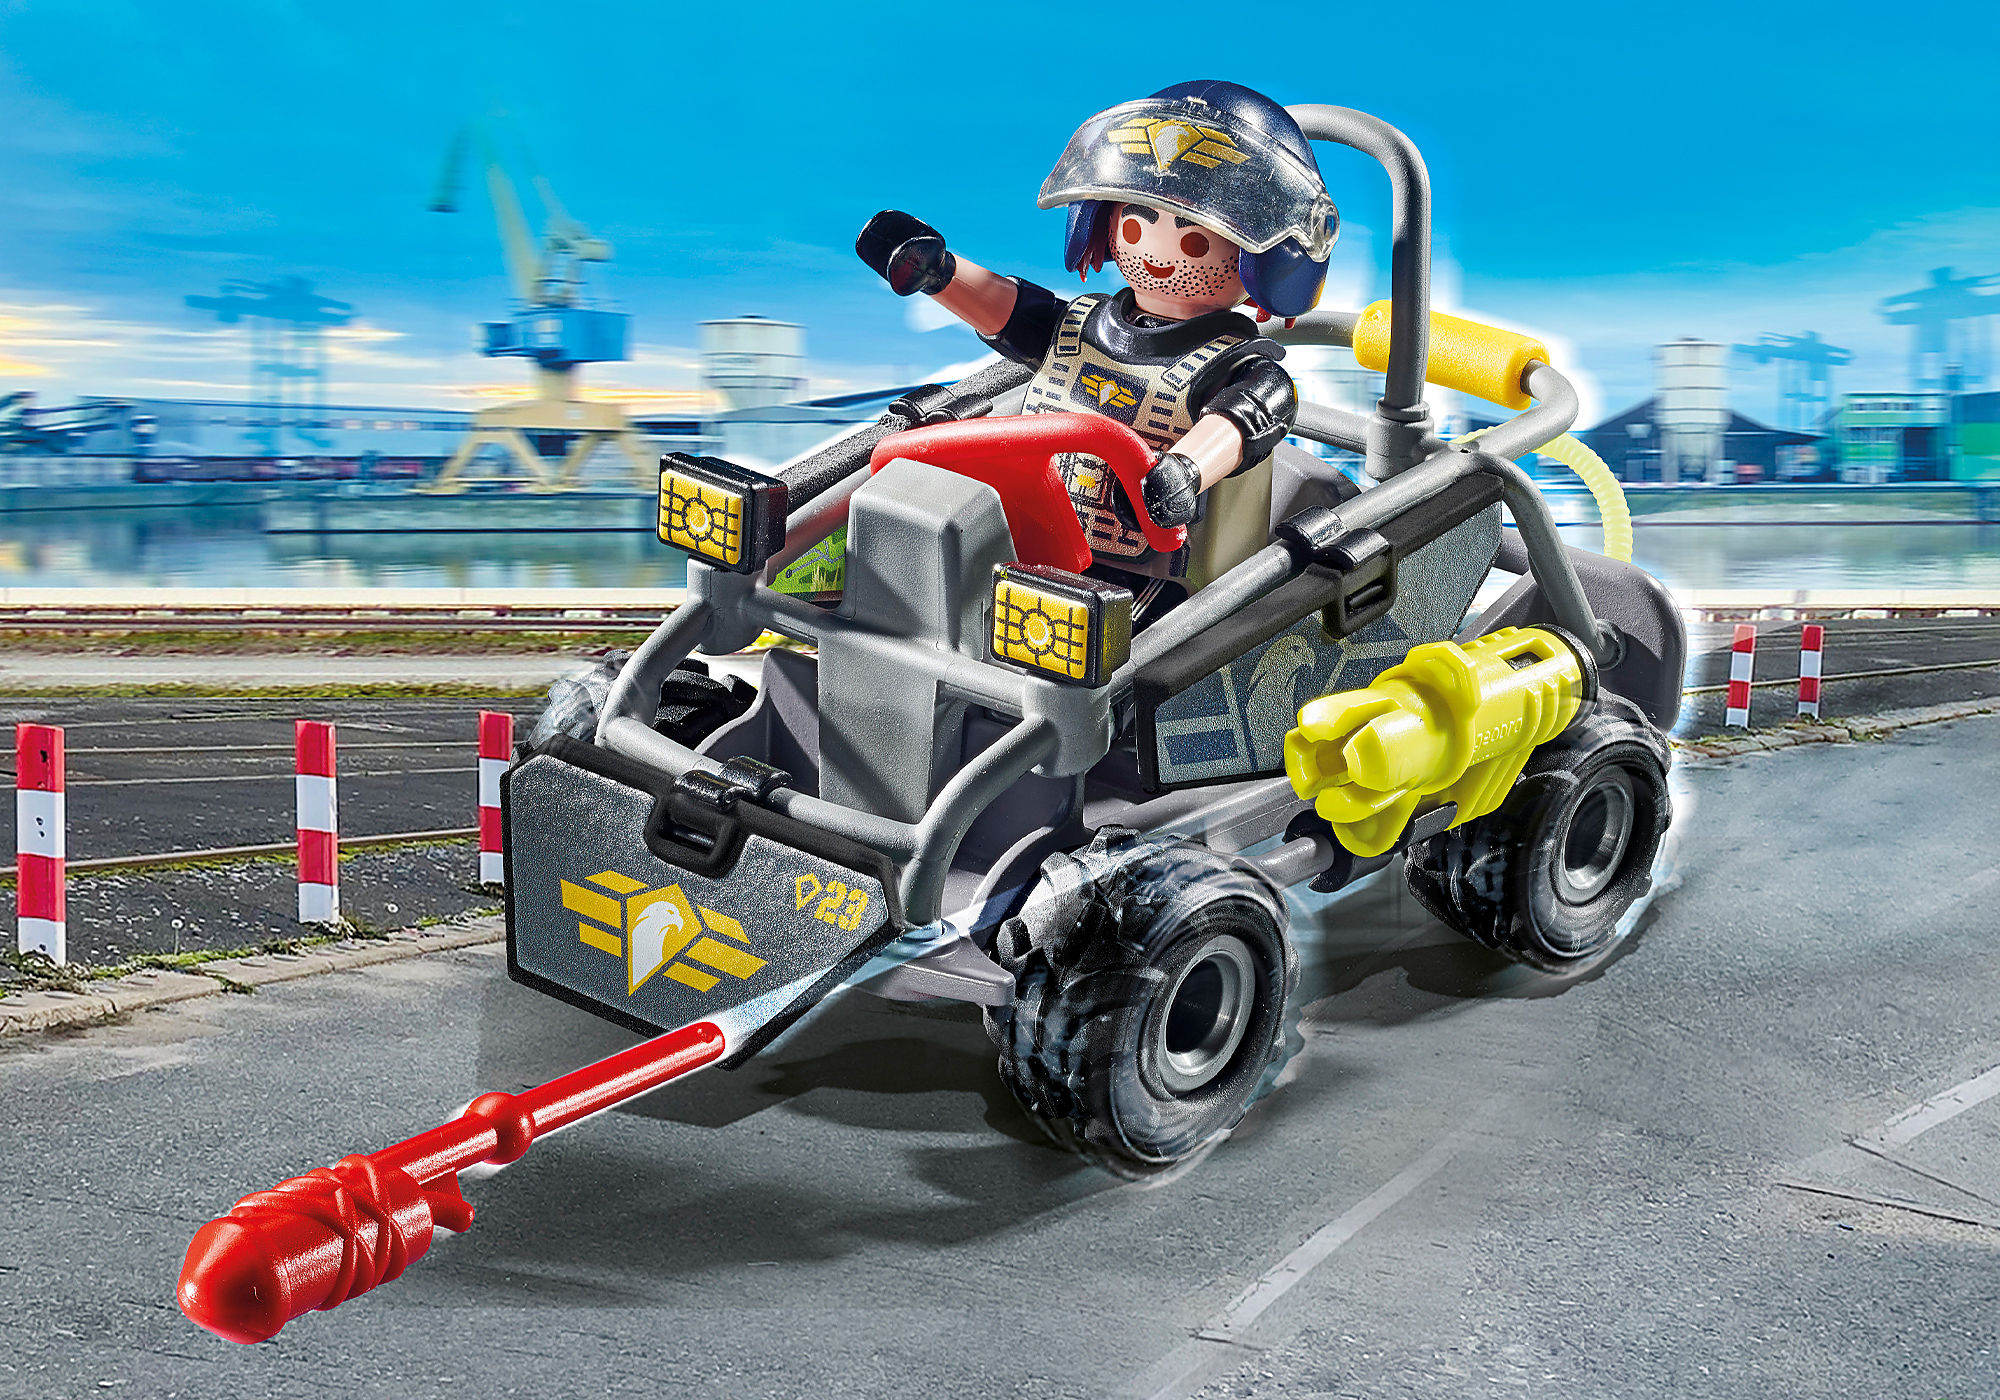 Playmobil Quad Police